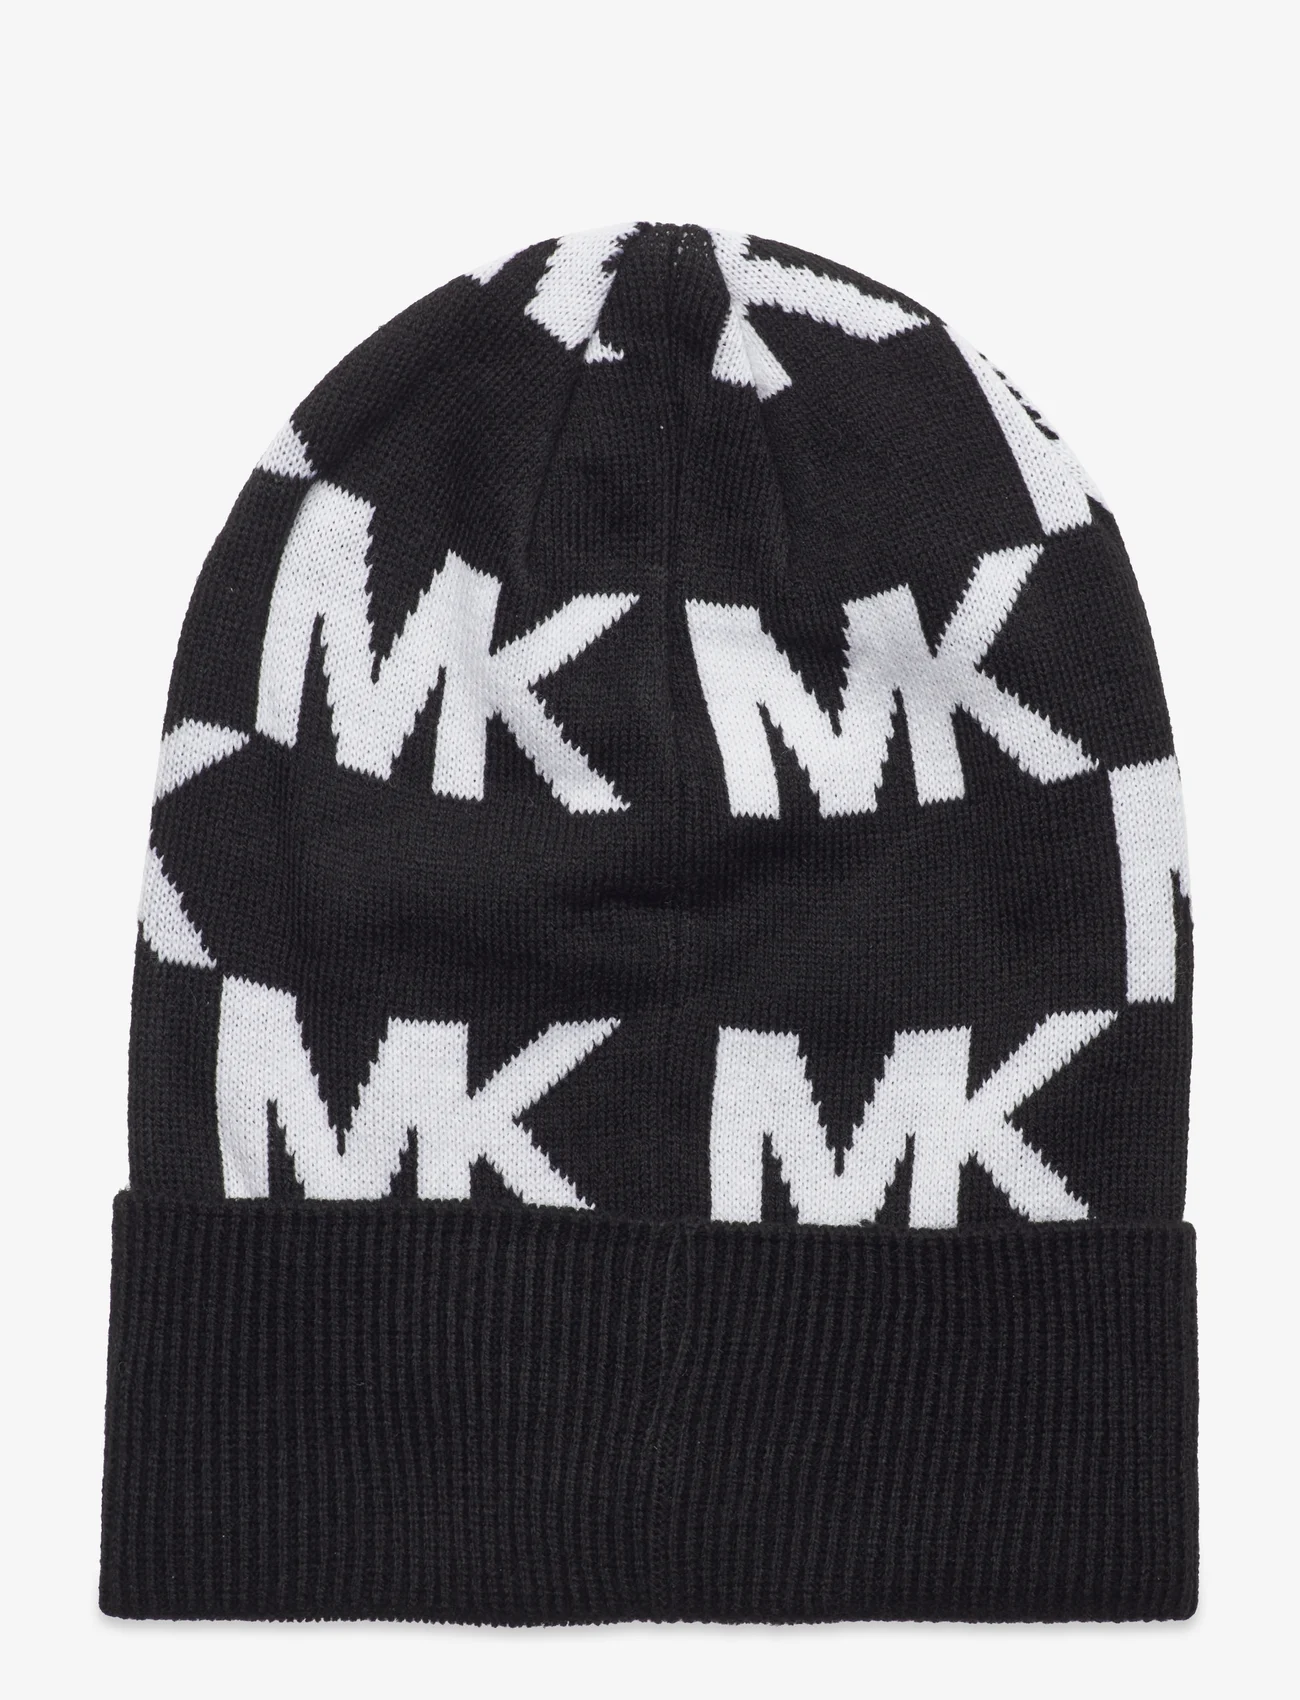 Michael Kors Accessories - Oversized chess mk cuff hat - beanies - black, cream - 1